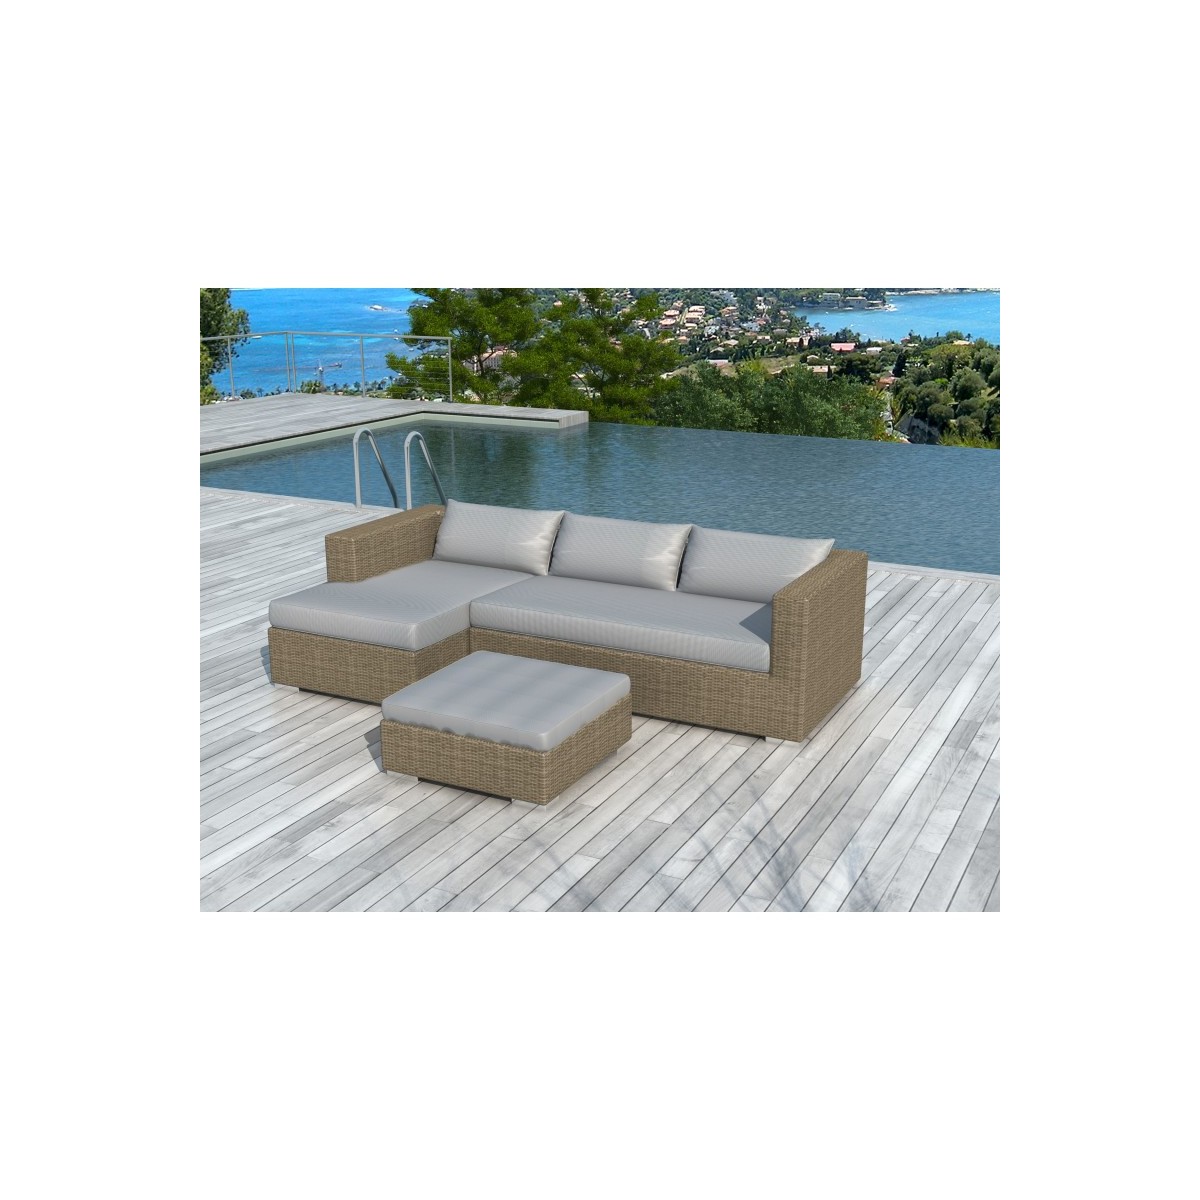 Garden furniture 4 seater BILBAO round braided resin (beige, light gray  pillows)